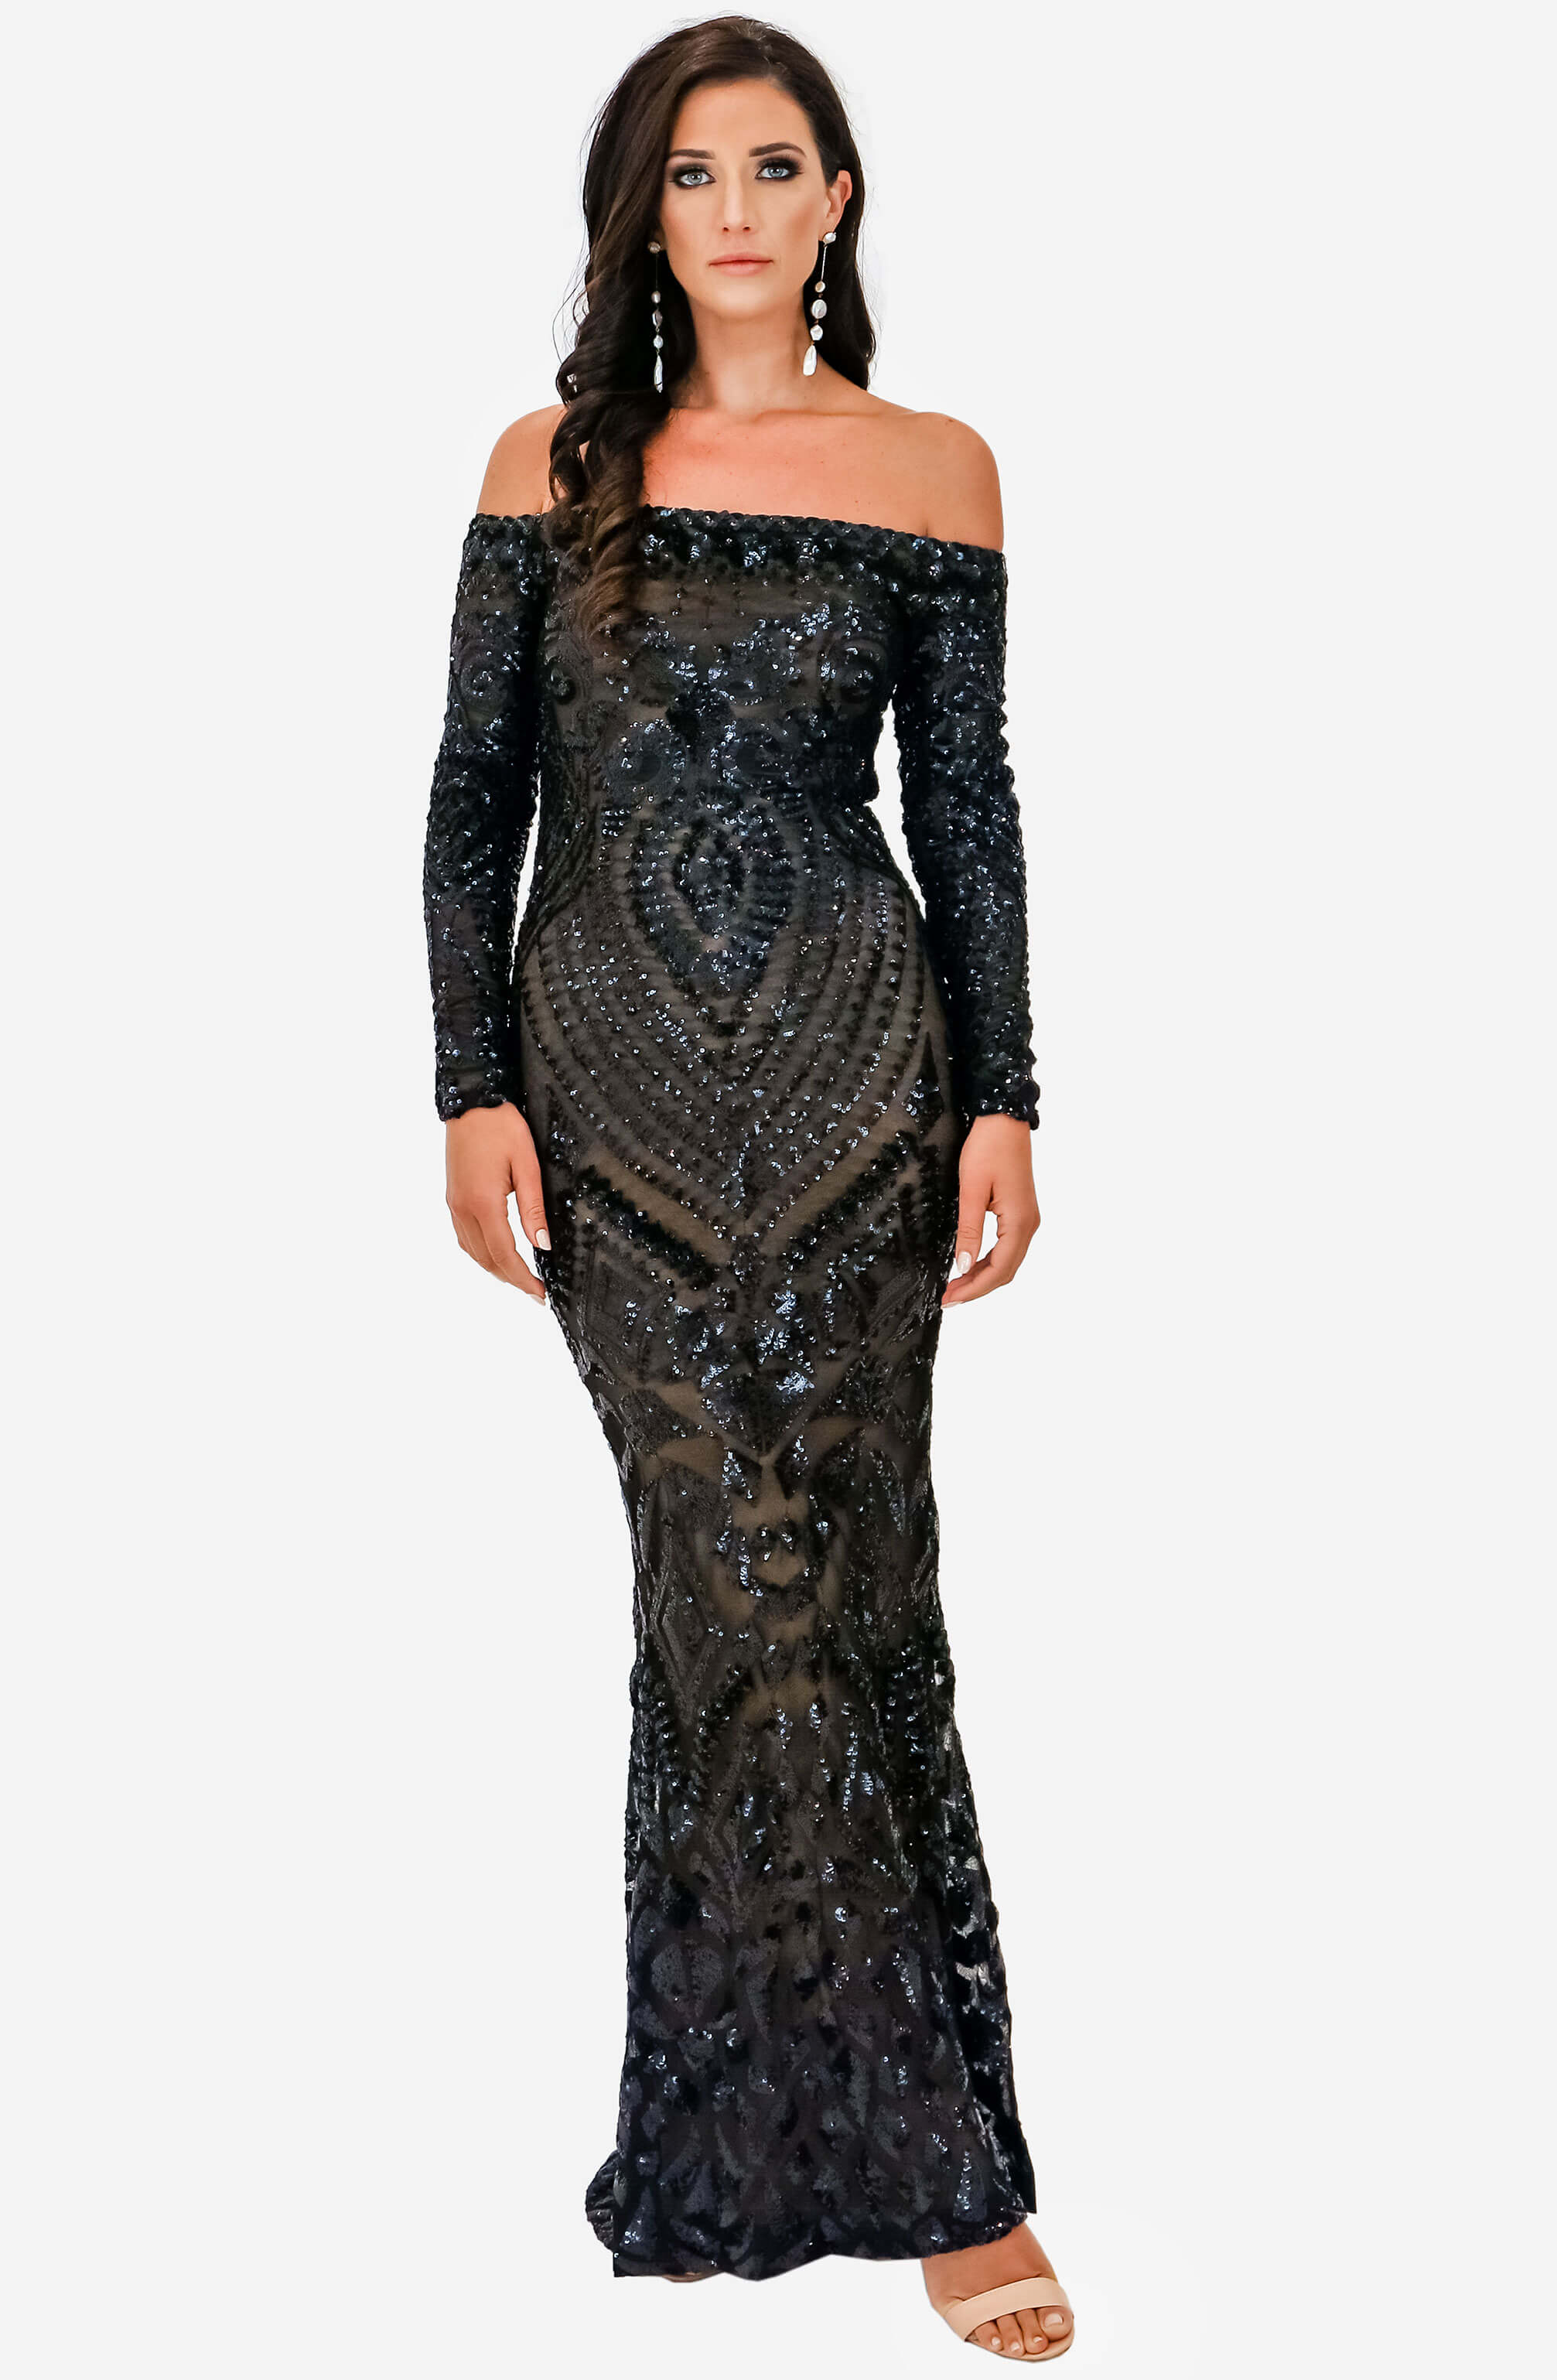 Arabella Black Dress by Nadine Merabi for Hire – High St. Hire